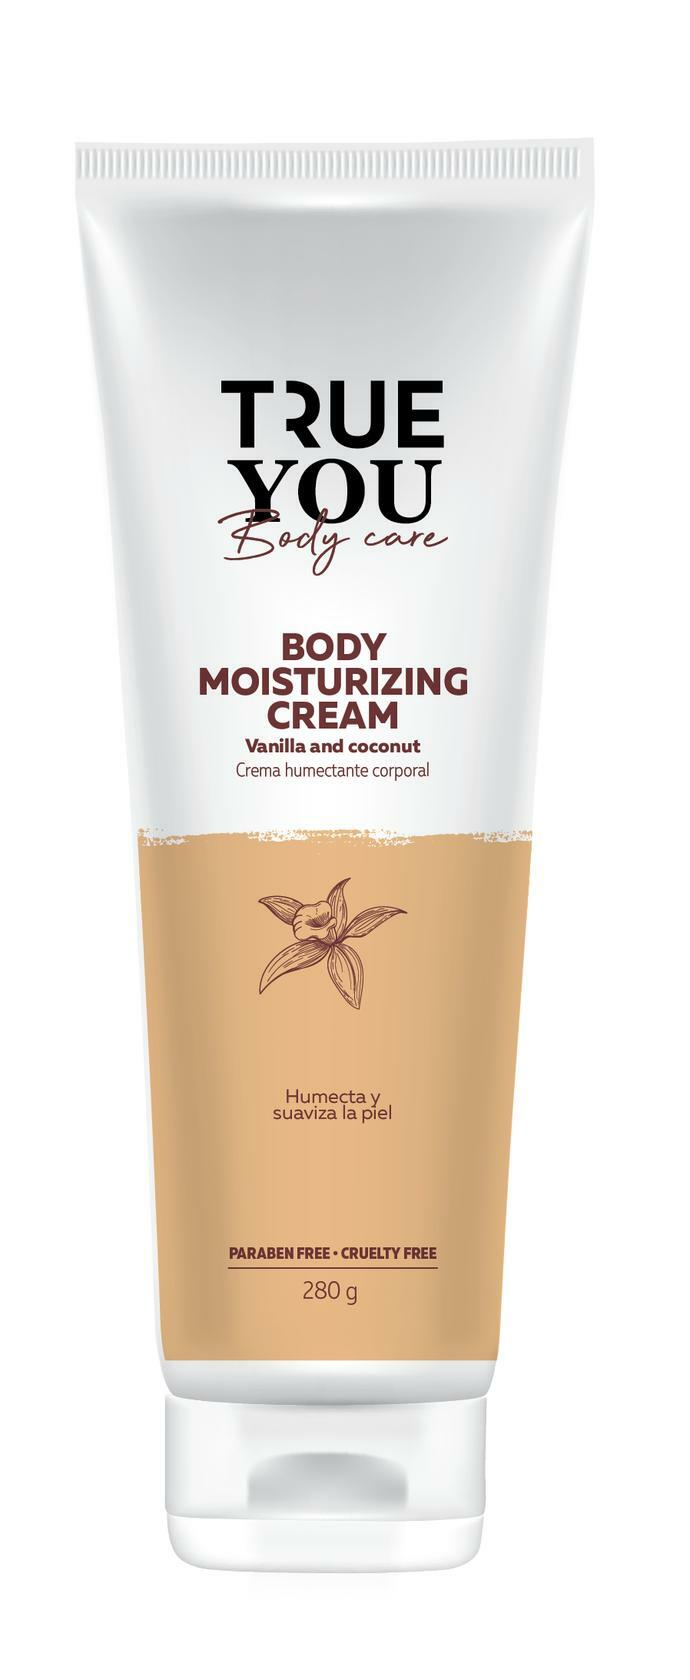 TRUE YOU Body Moisturizing Cream Vanilla and Coconut with Aloe, Calendula and Coenzima Q10 9.46 oz